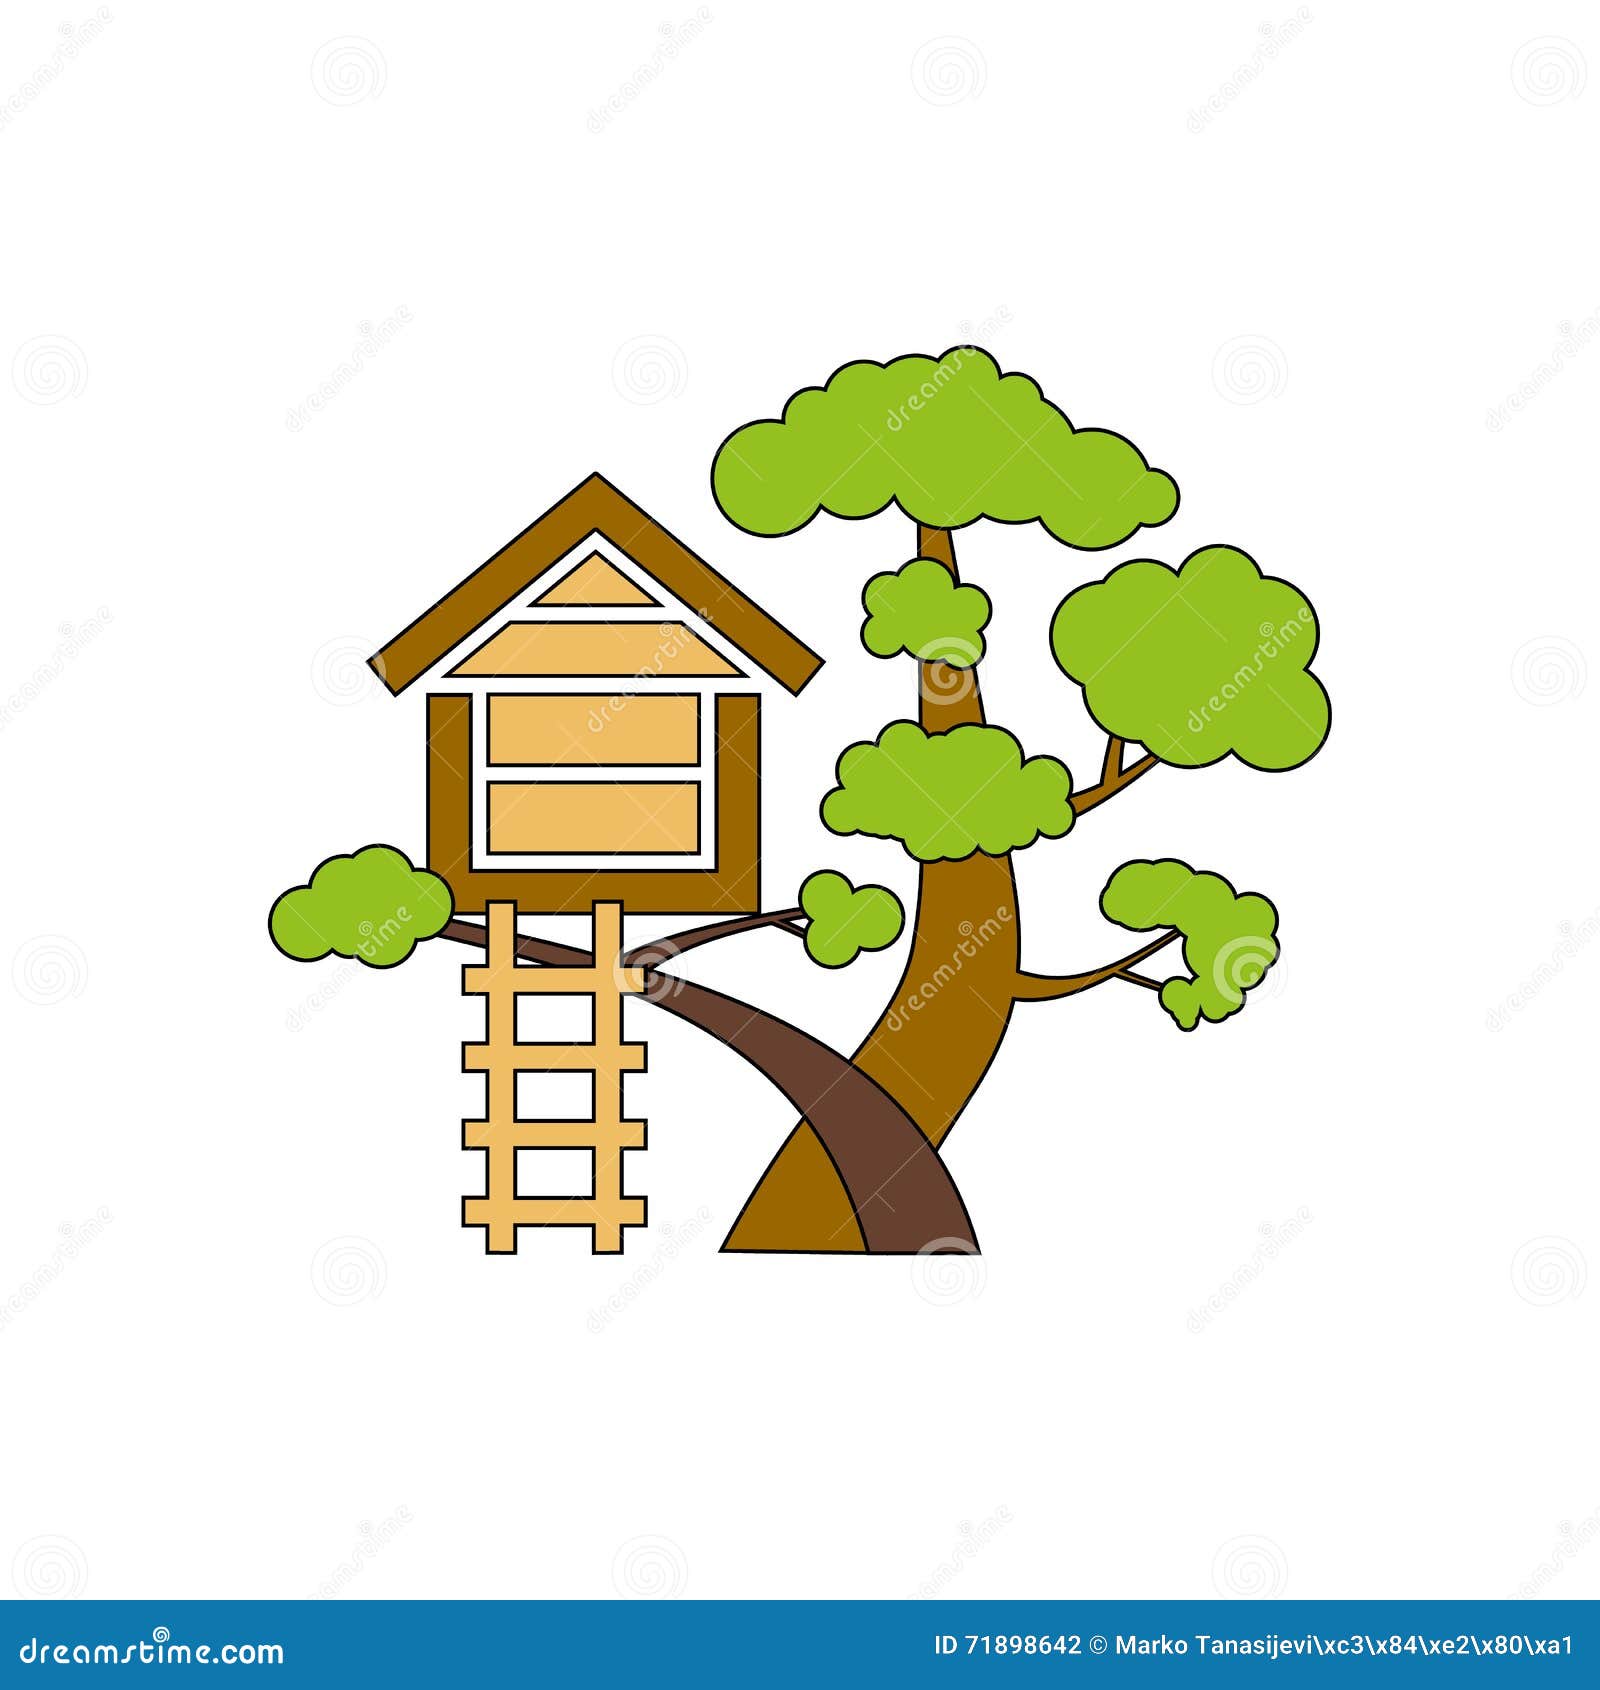 Tree House Stock Vector - Image: 71898642